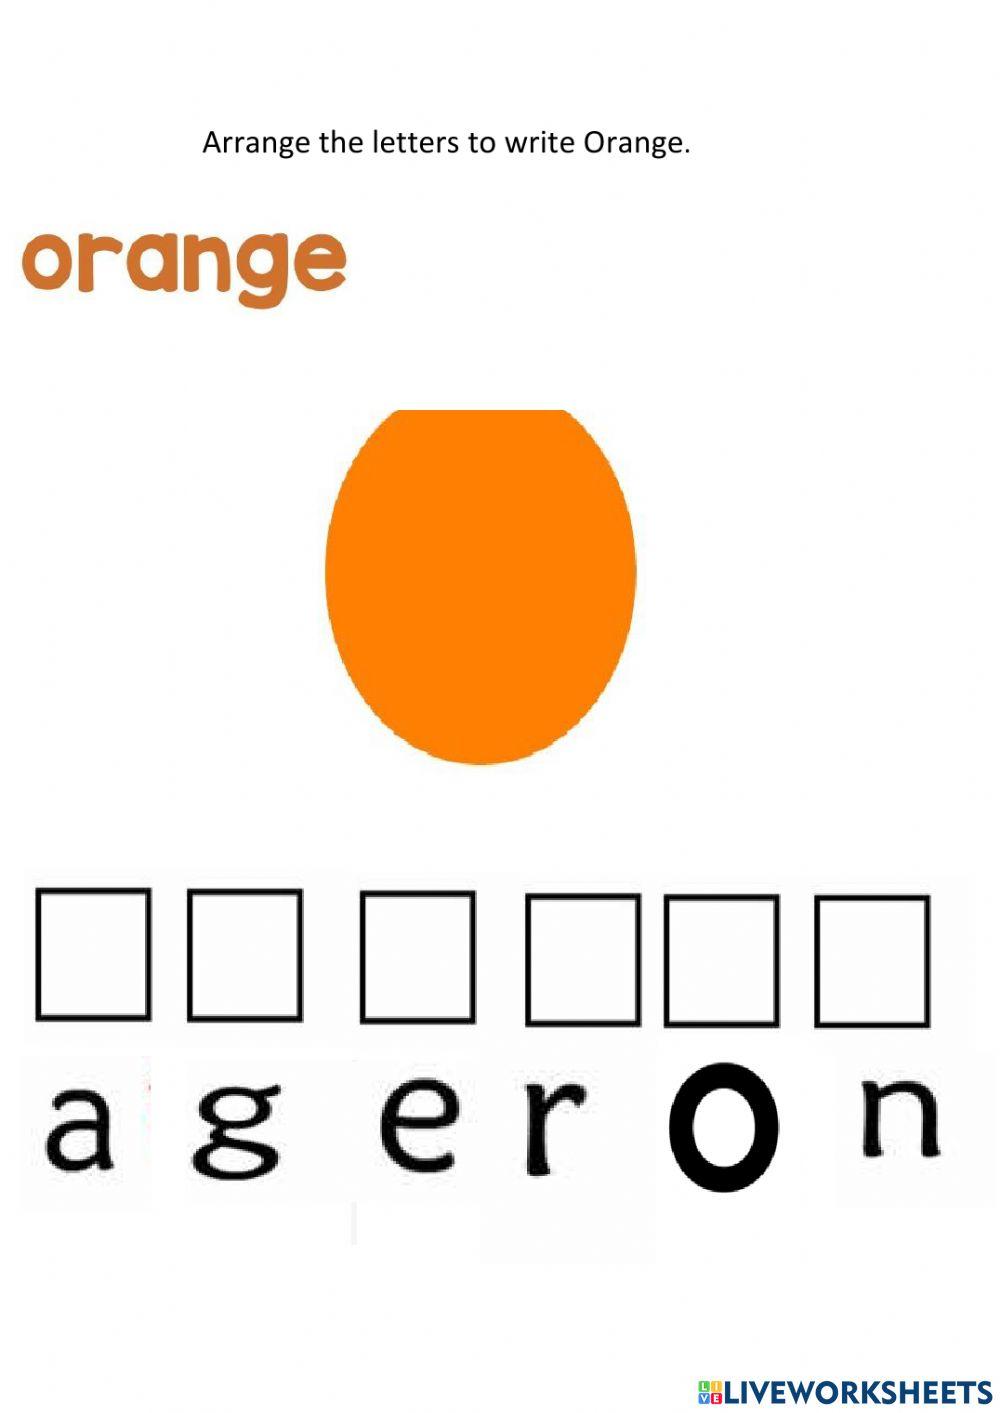 Arrange the letters to read orange